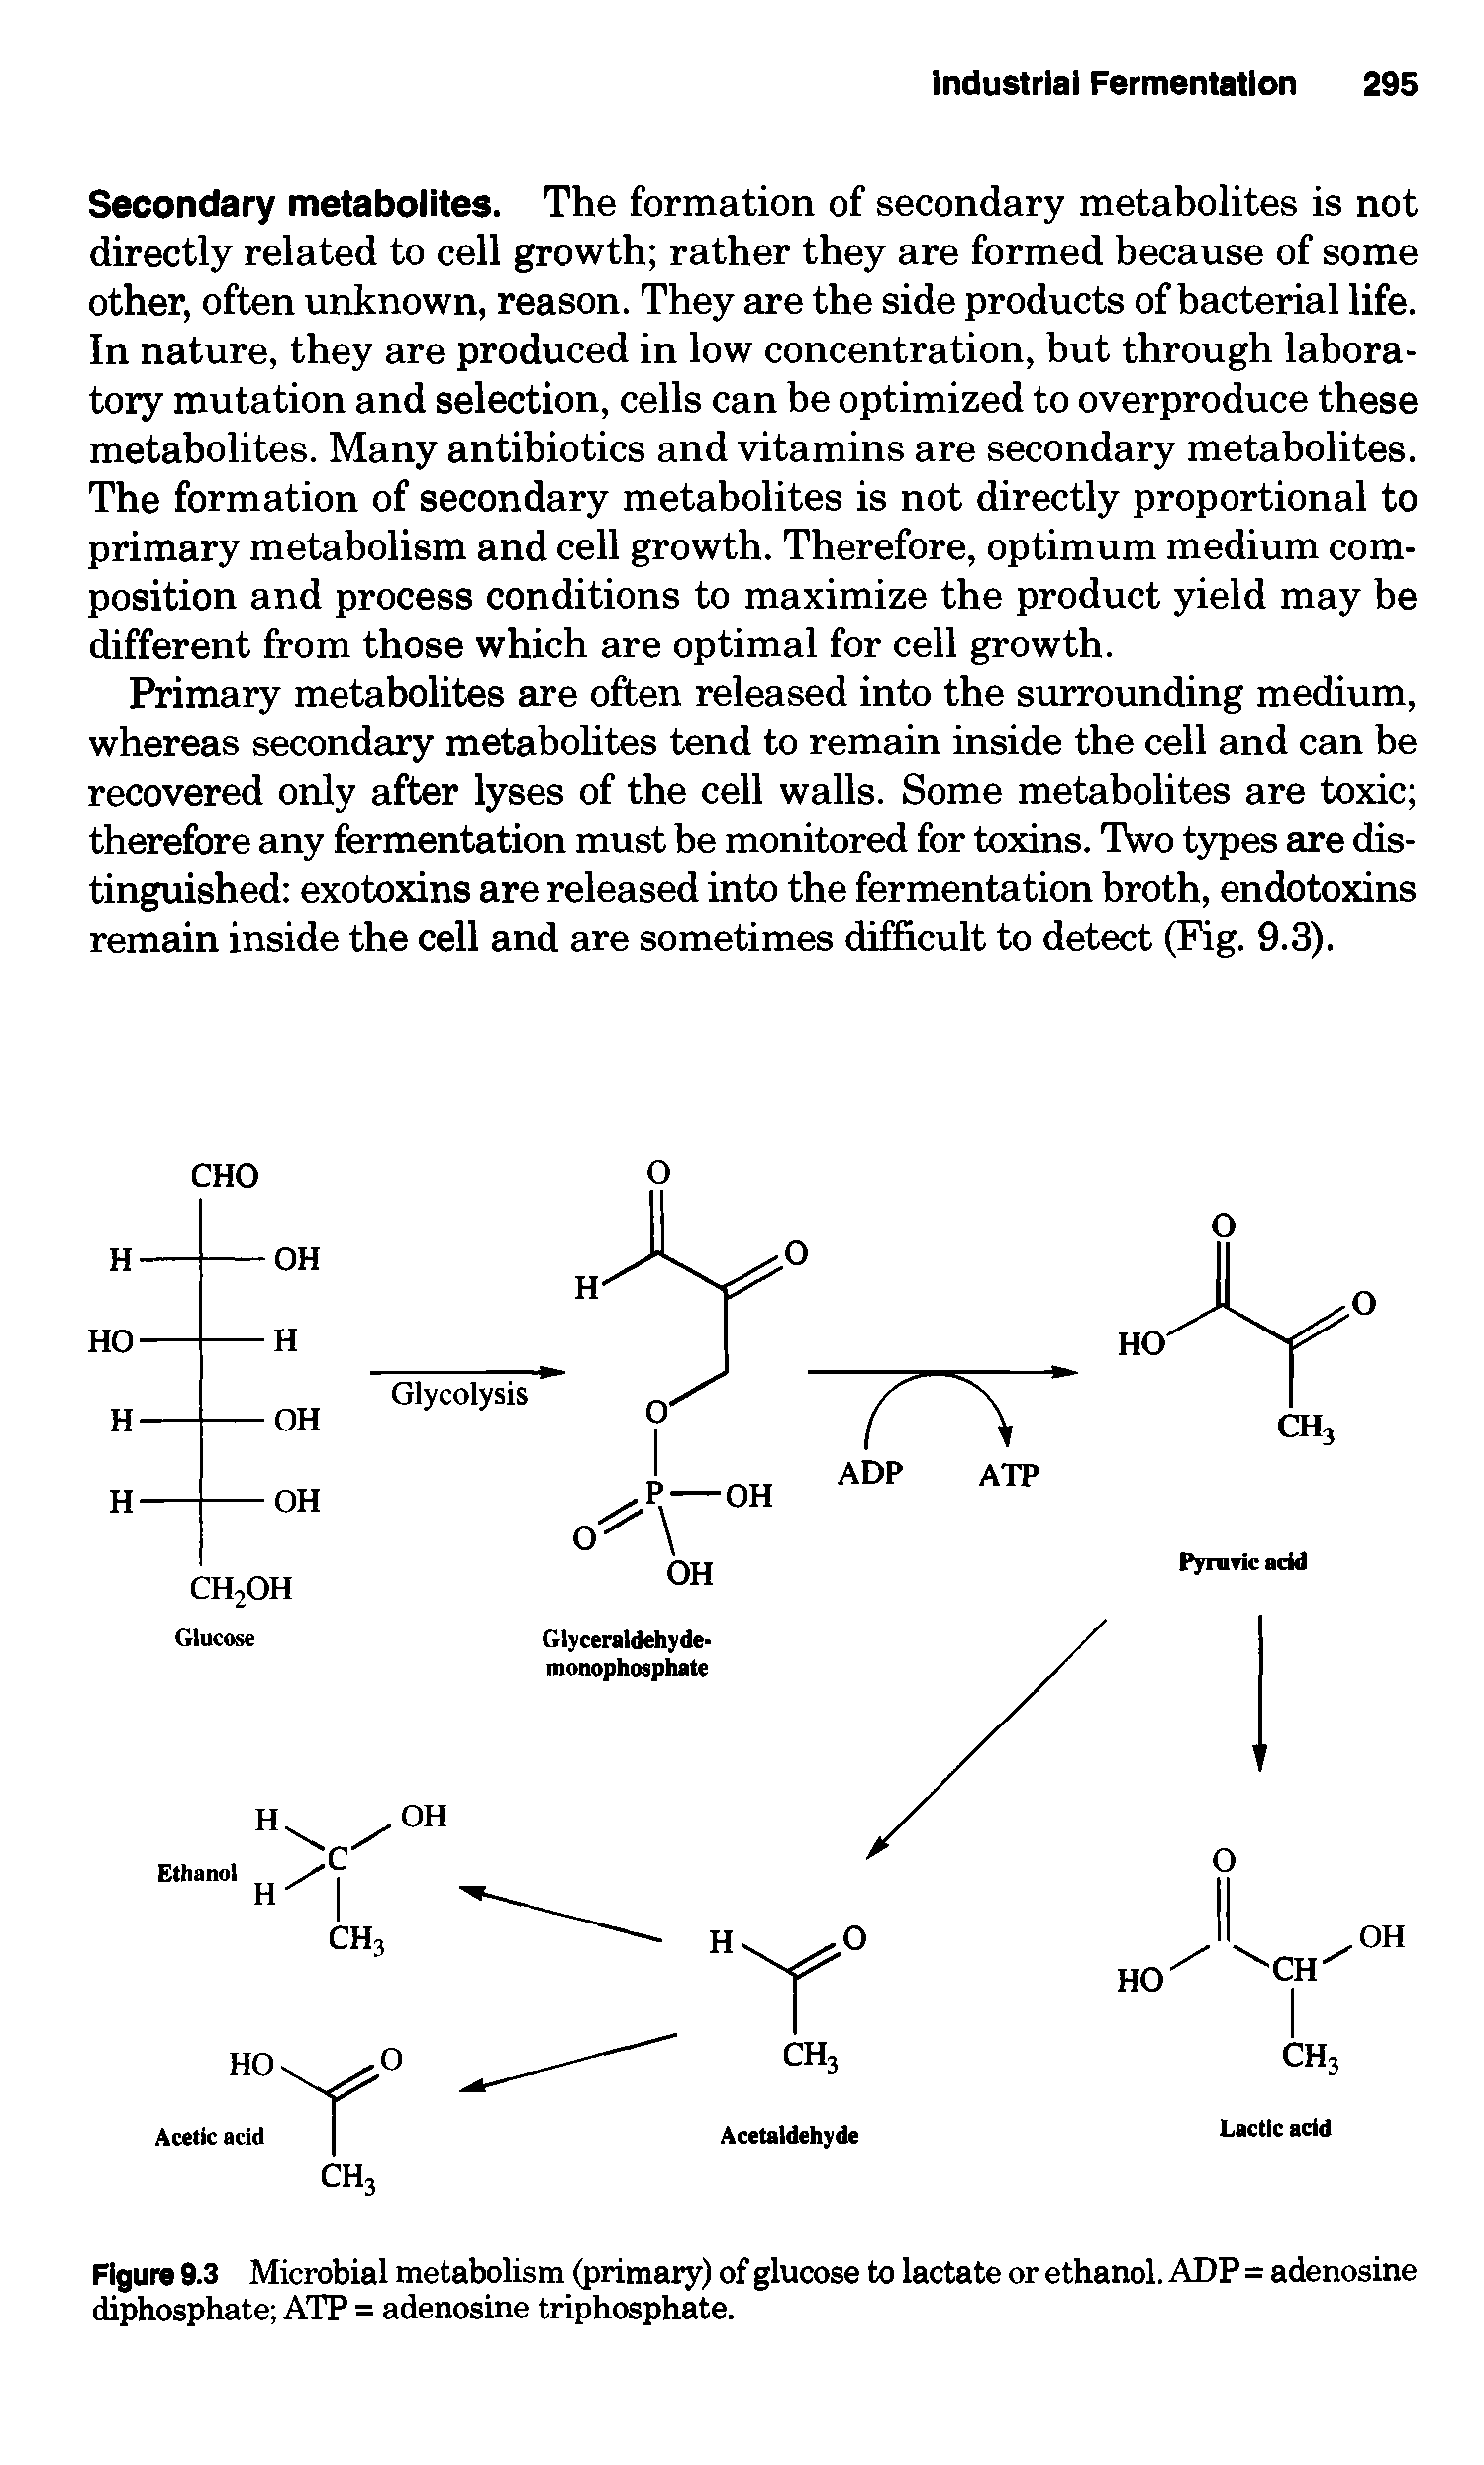 Figure 9.3 Microbial metabolism (primary) of glucose to lactate or ethanol. ADP = adenosine diphosphate ATP = adenosine triphosphate.